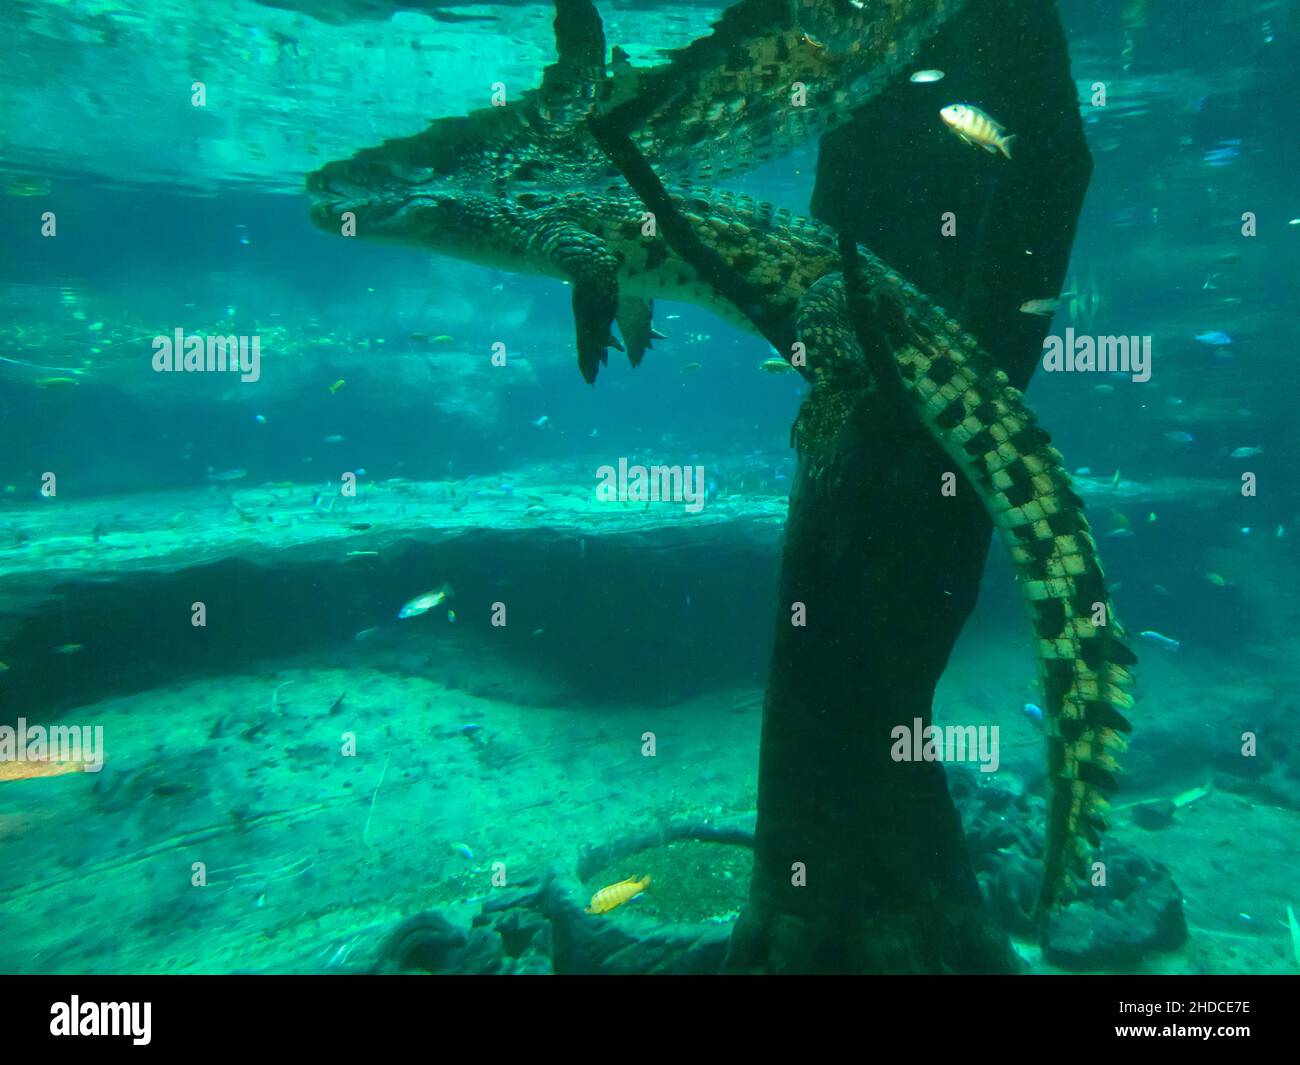 Nilkrokodil unter Wasser, Crocodylus niloticus / Nile Crocodile under Water, Crocodylus niloticus Stock Photo